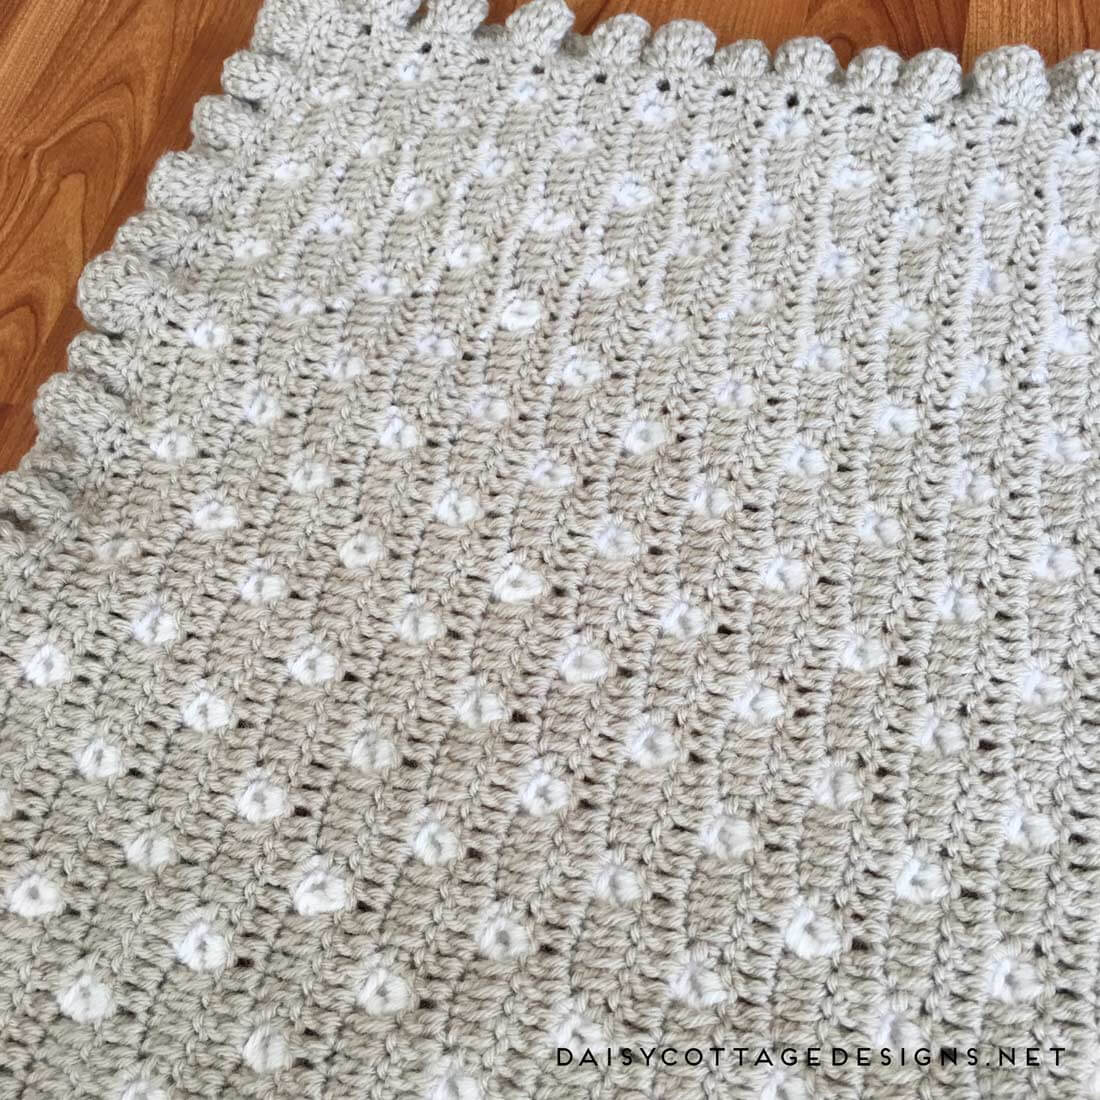 Free Crochet Baby Patterns Appealing Crochet Ba Blankets Crochet And Knitting Patterns 2019